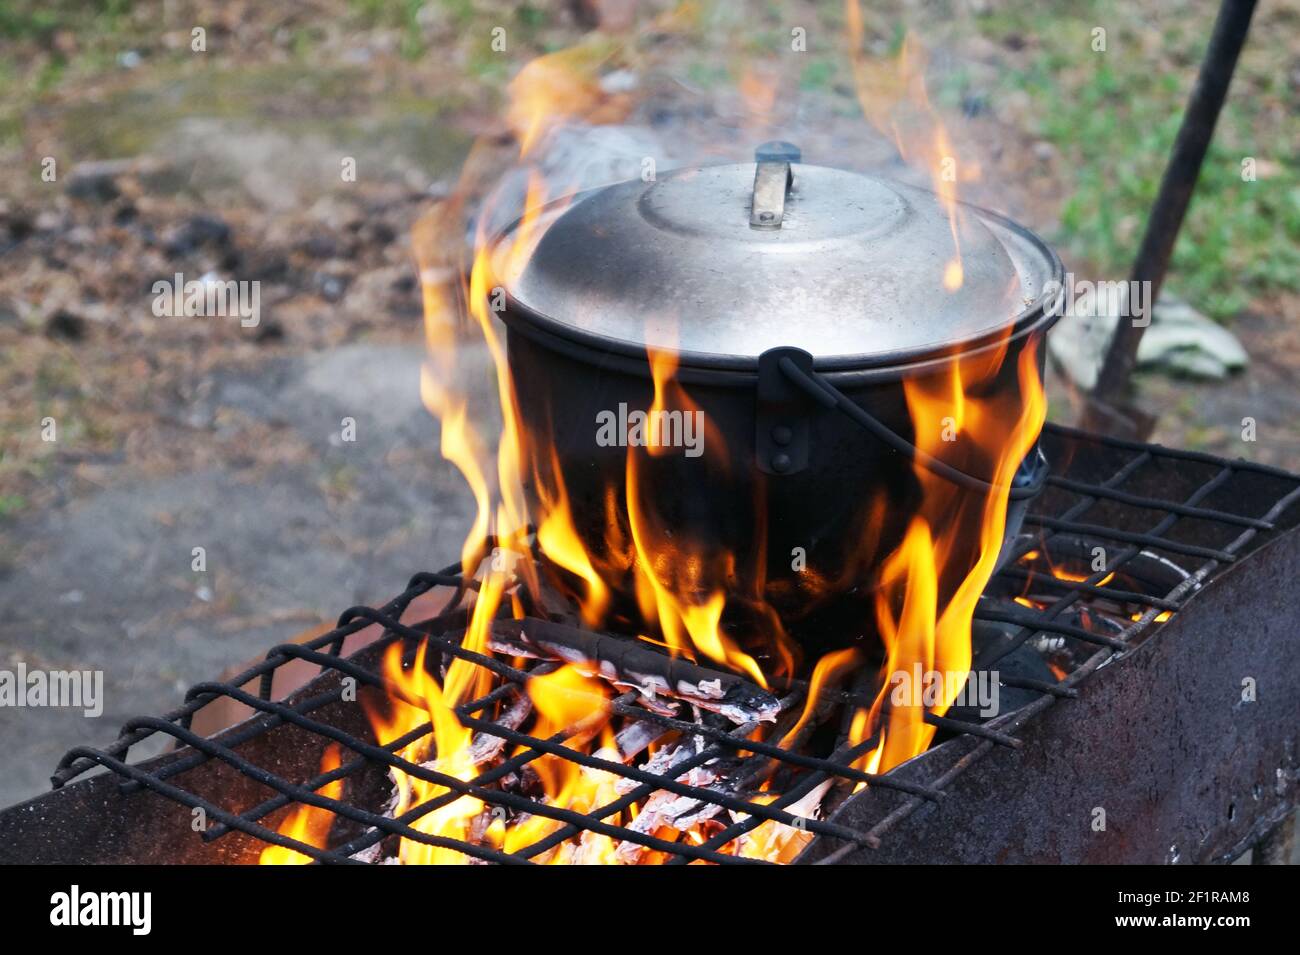 Four quadrant cooking cauldron